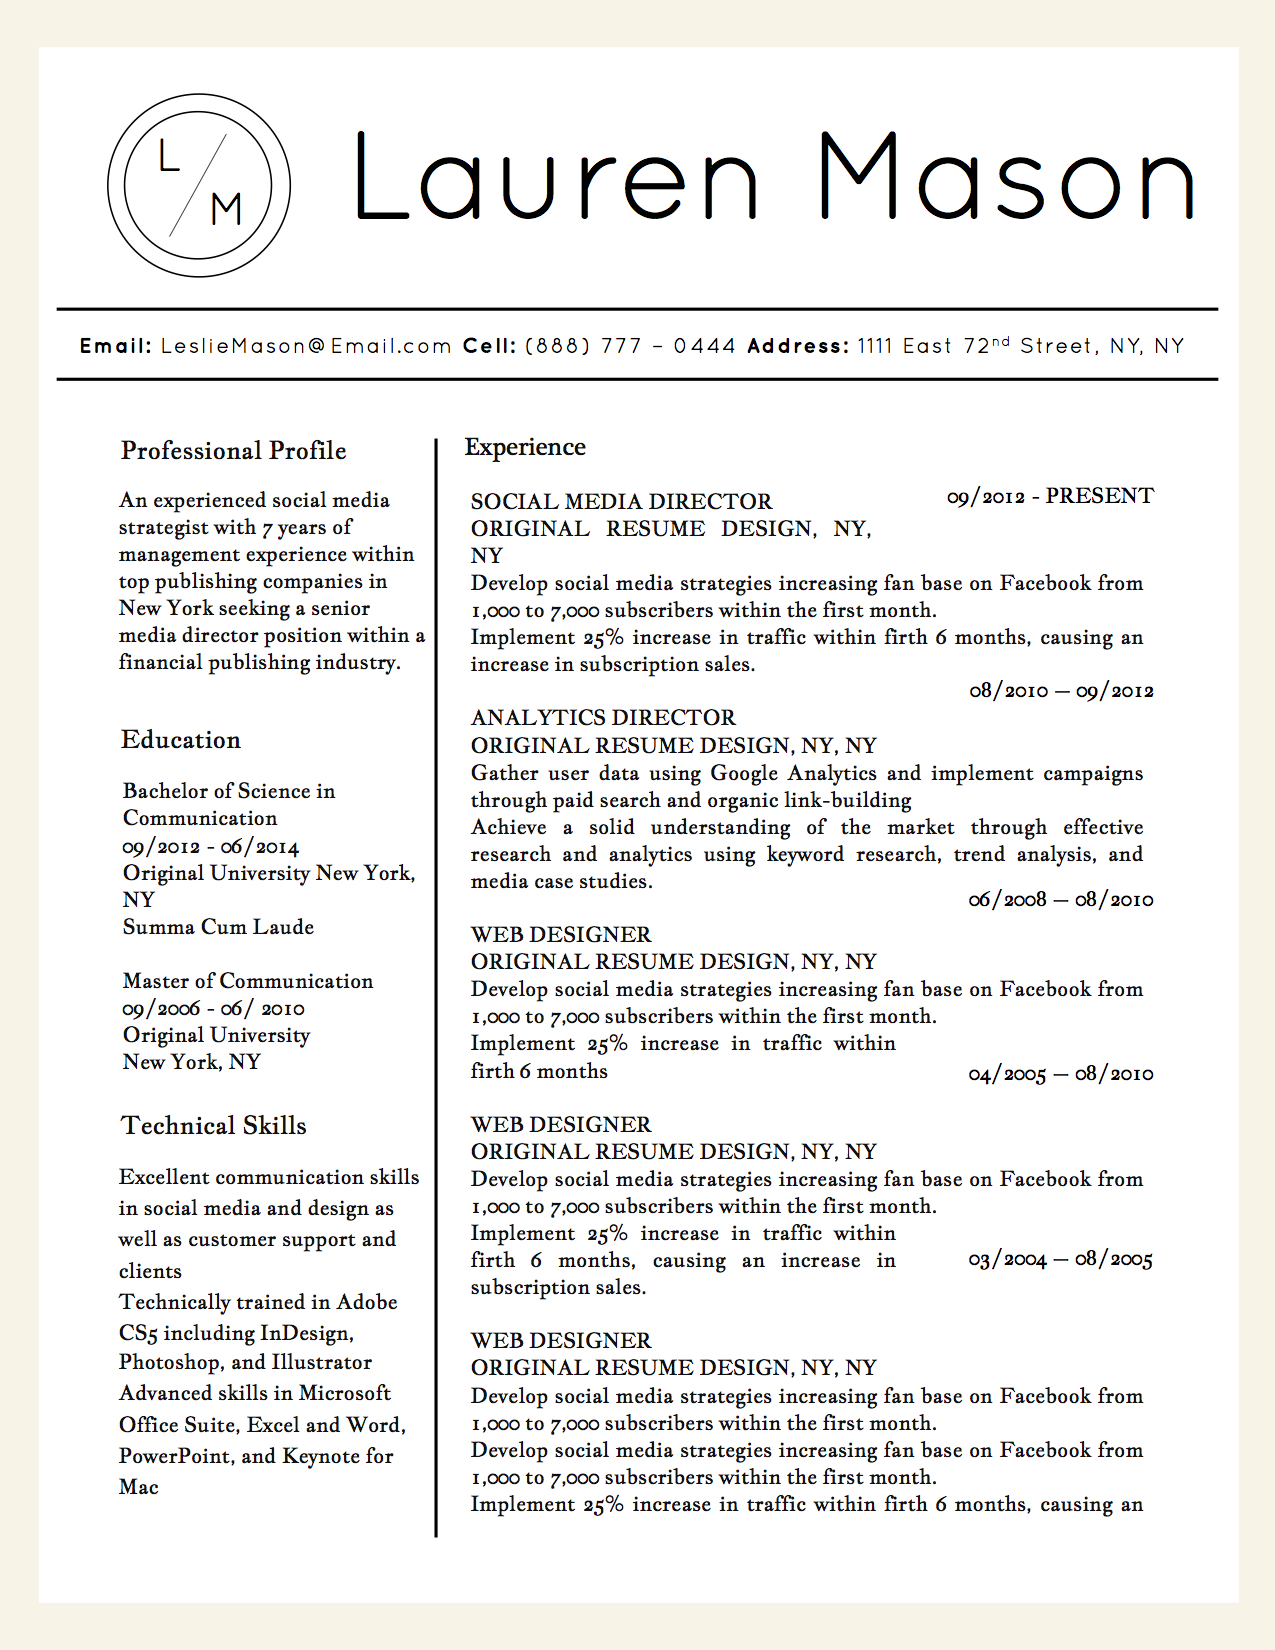 lauren mason resume template